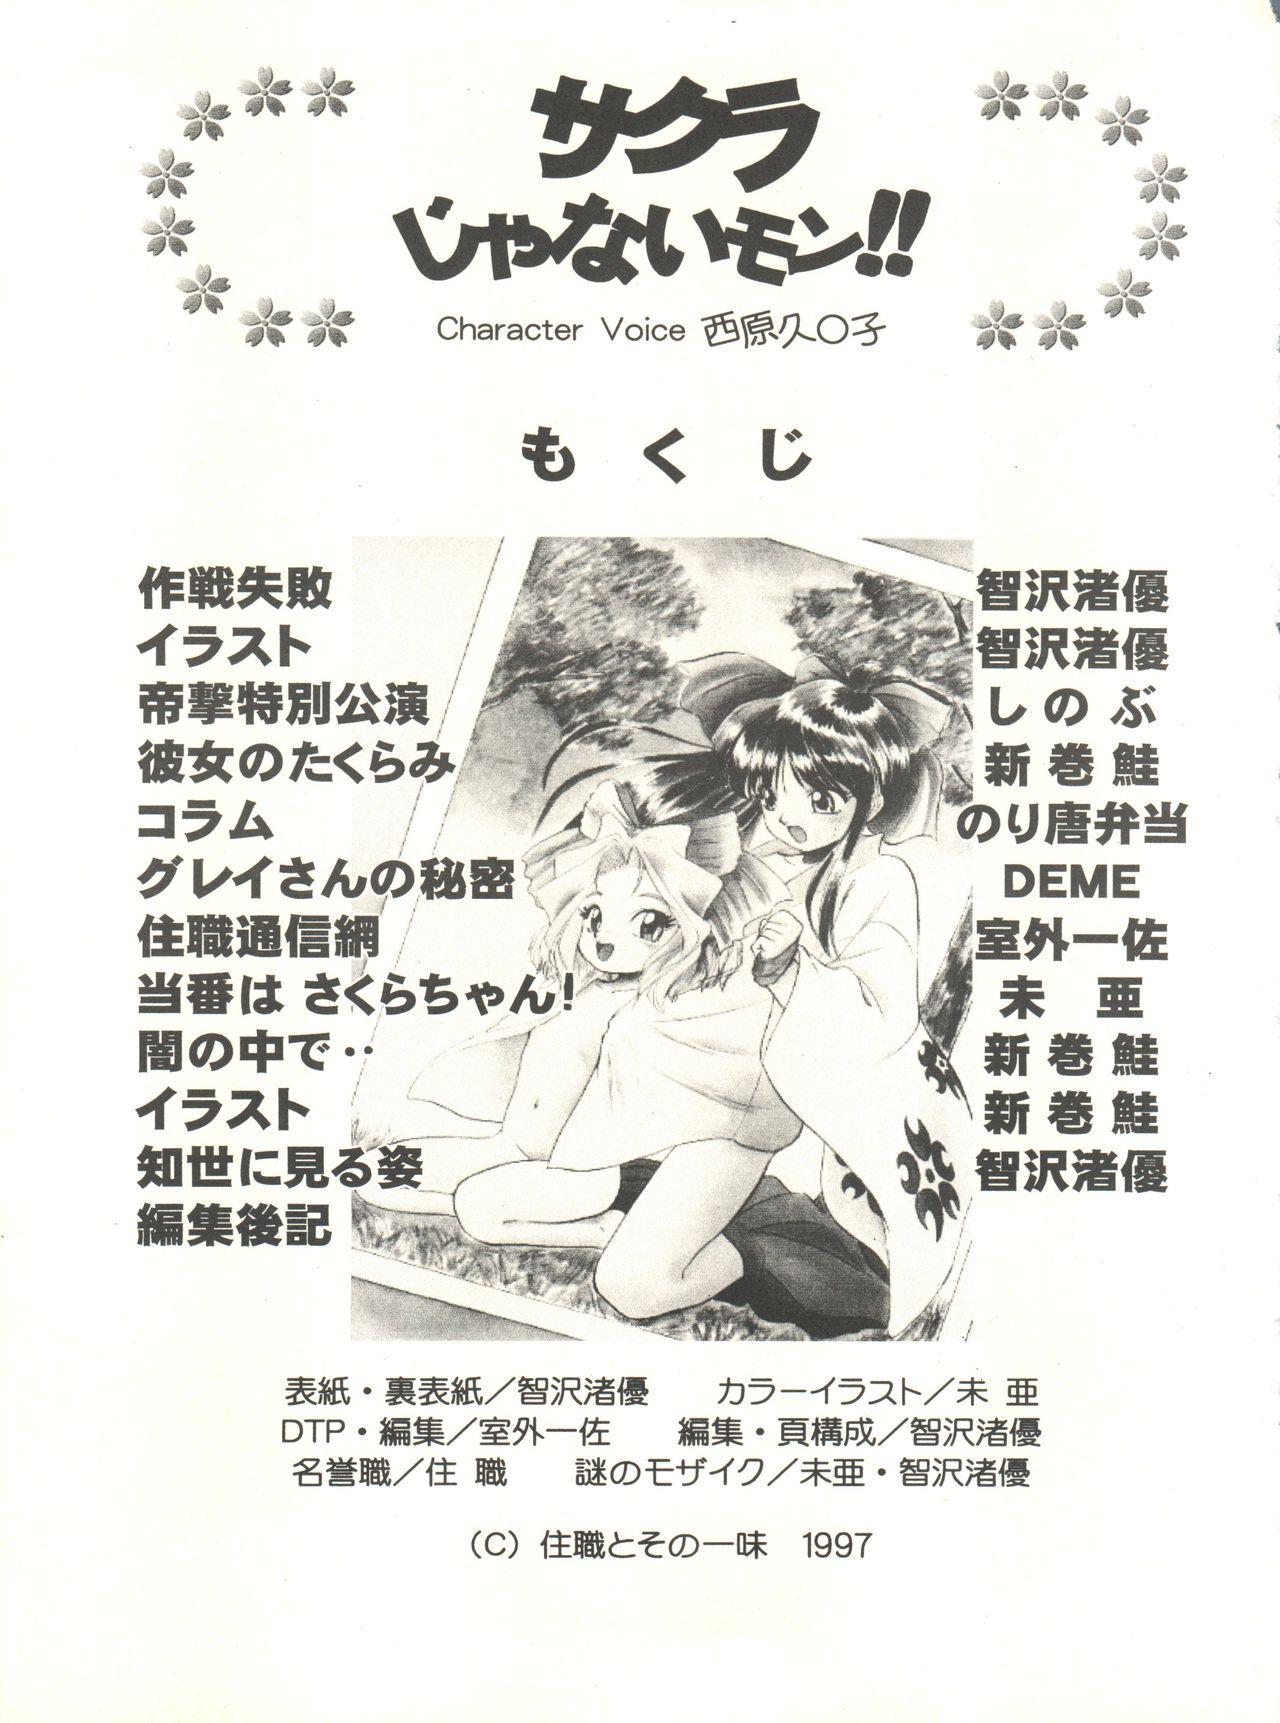 Sakura Janai Mon! Character Voice Nishihara Kumiko 66